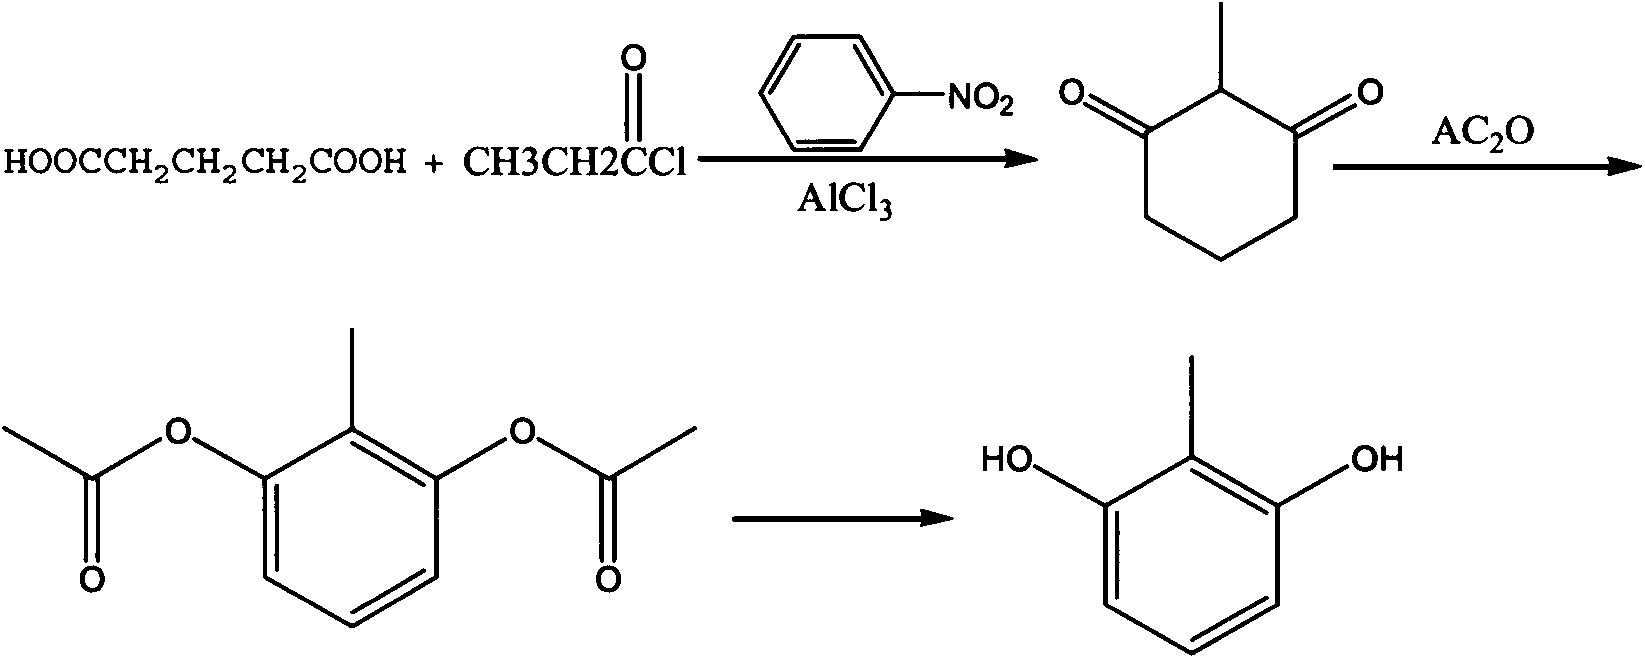 Preparation method of 2,6-dihydroxytoluene